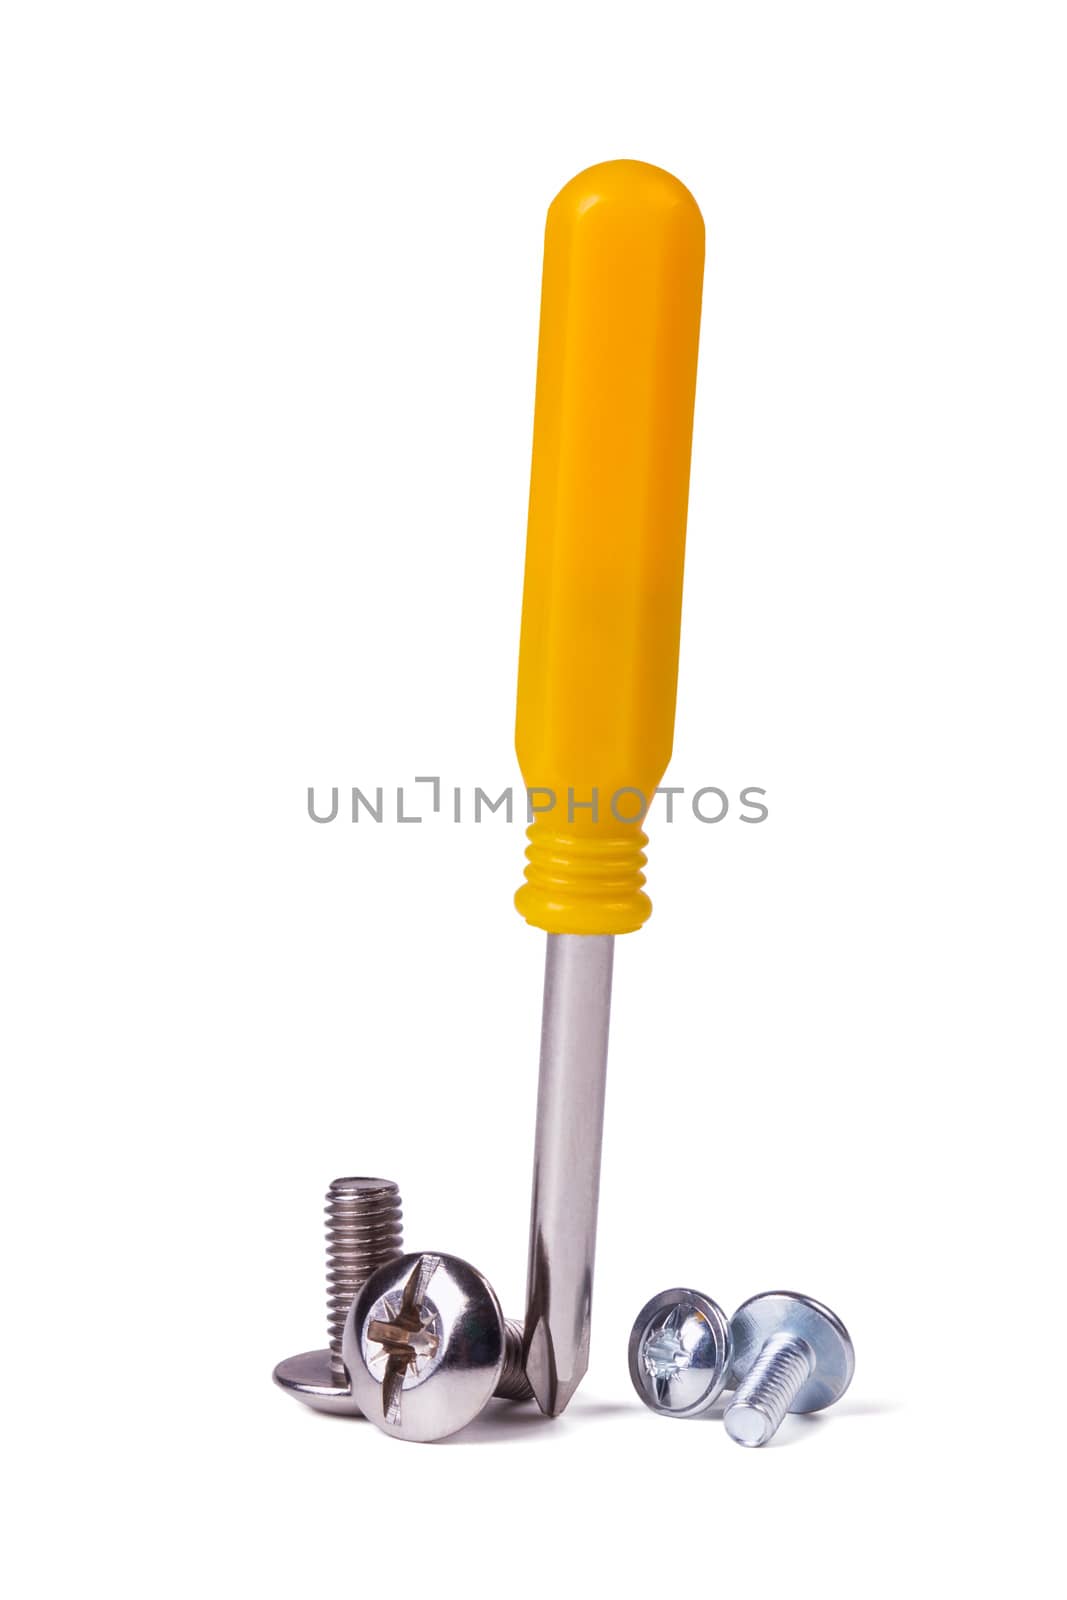 tool screwdrivers by pilotL39